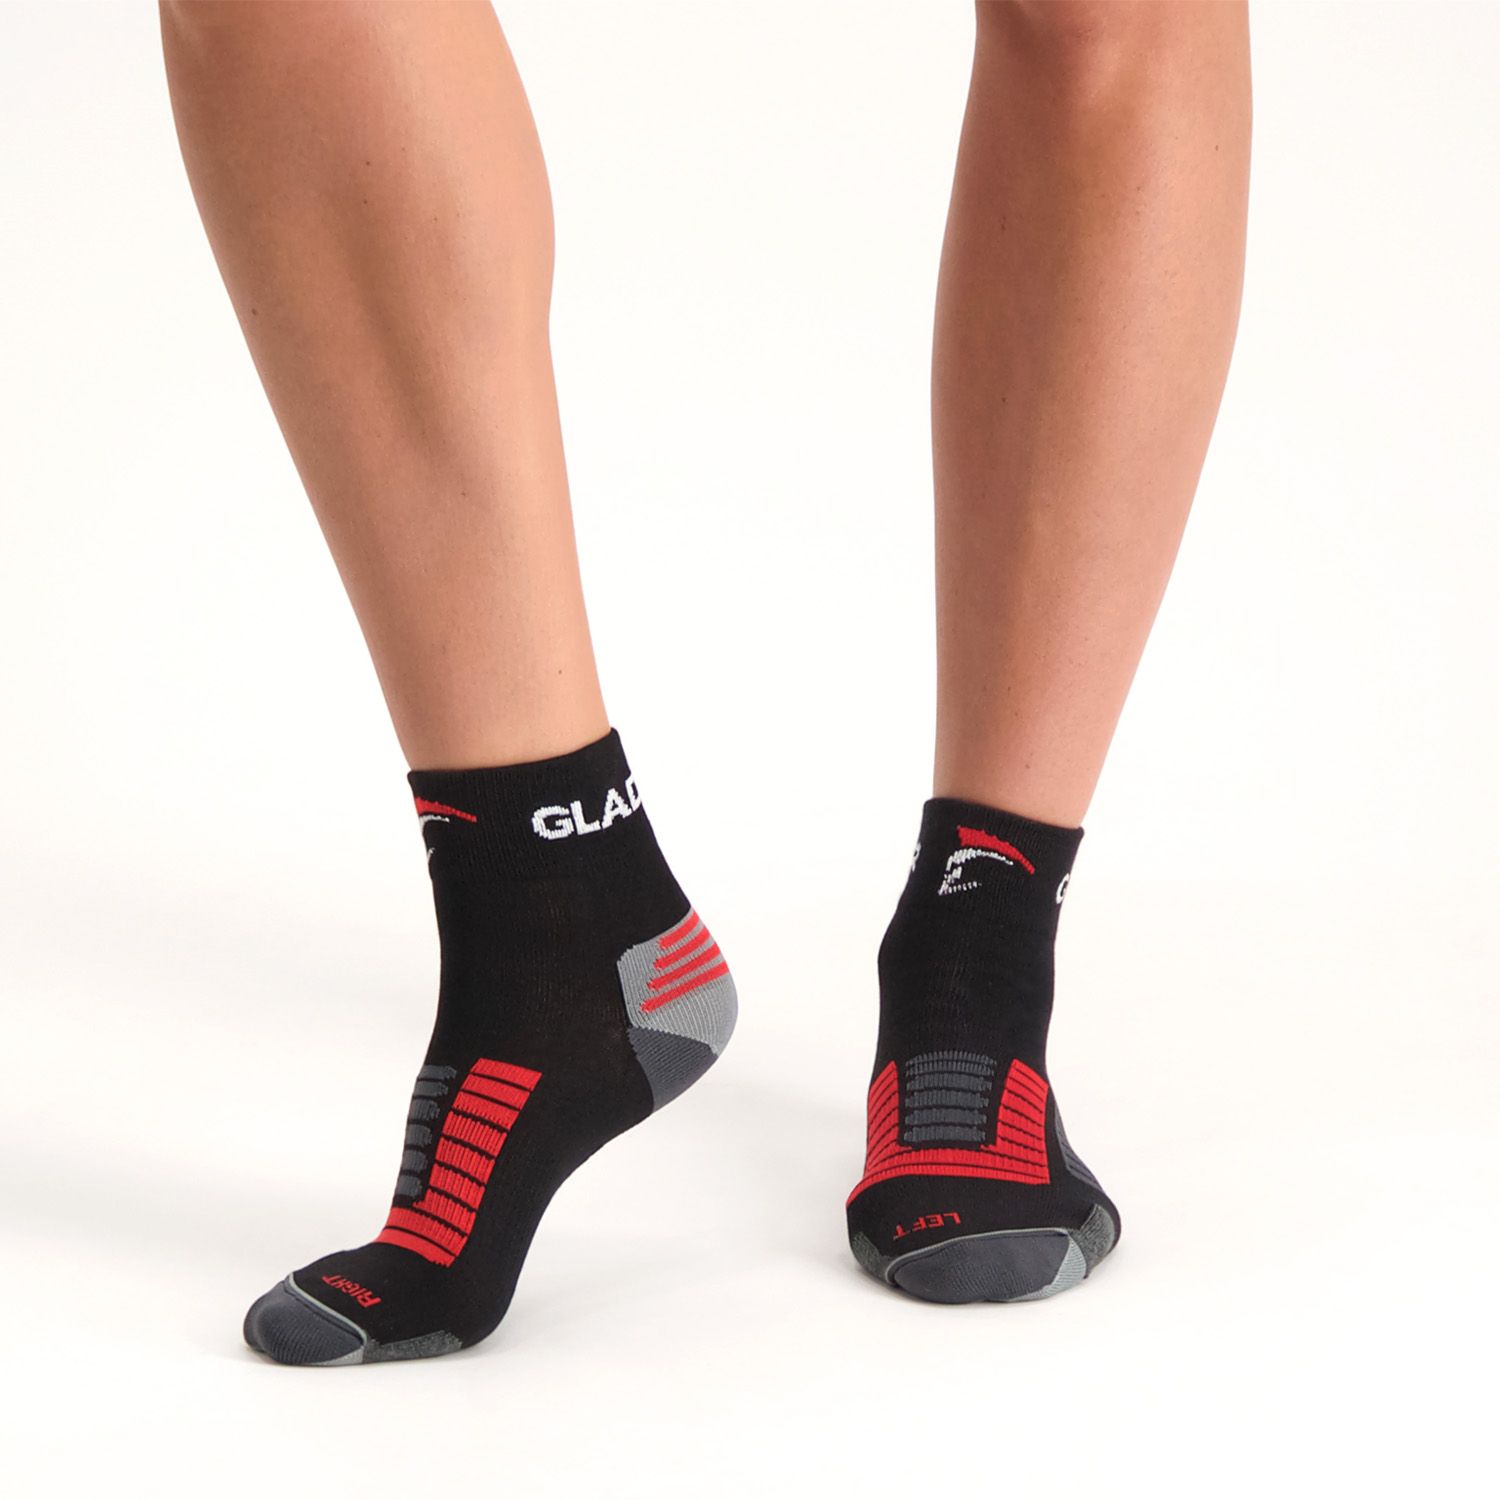 gladiator sports compression socks black